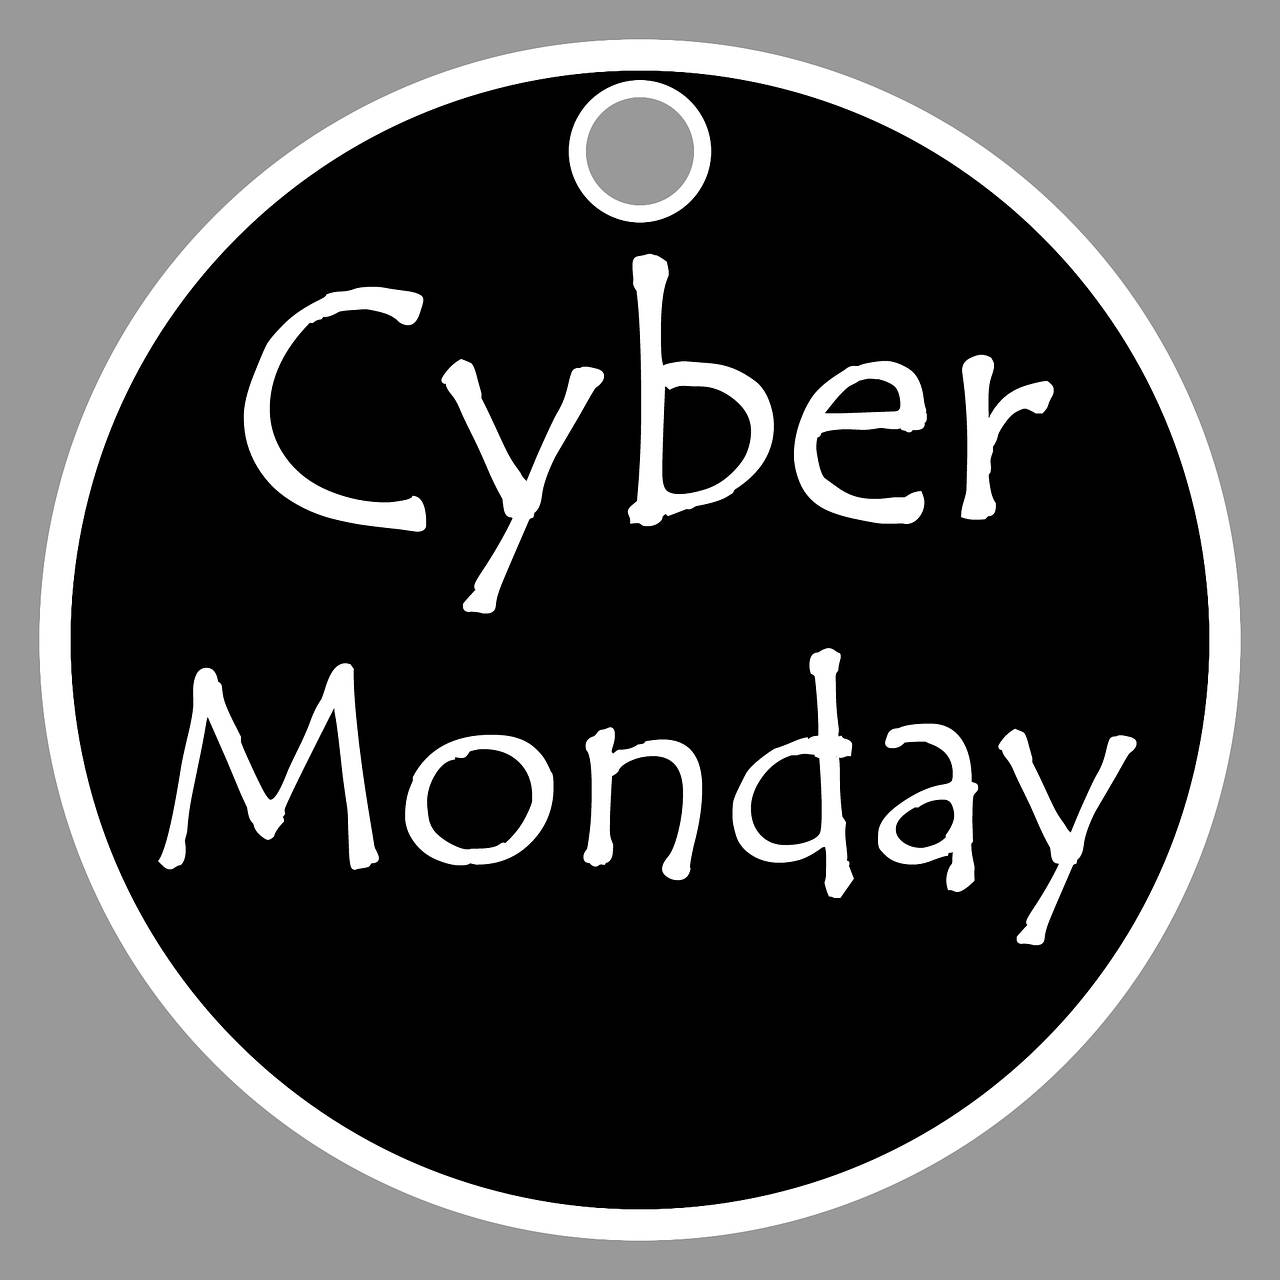 Cyber Monday Circular Door Signage